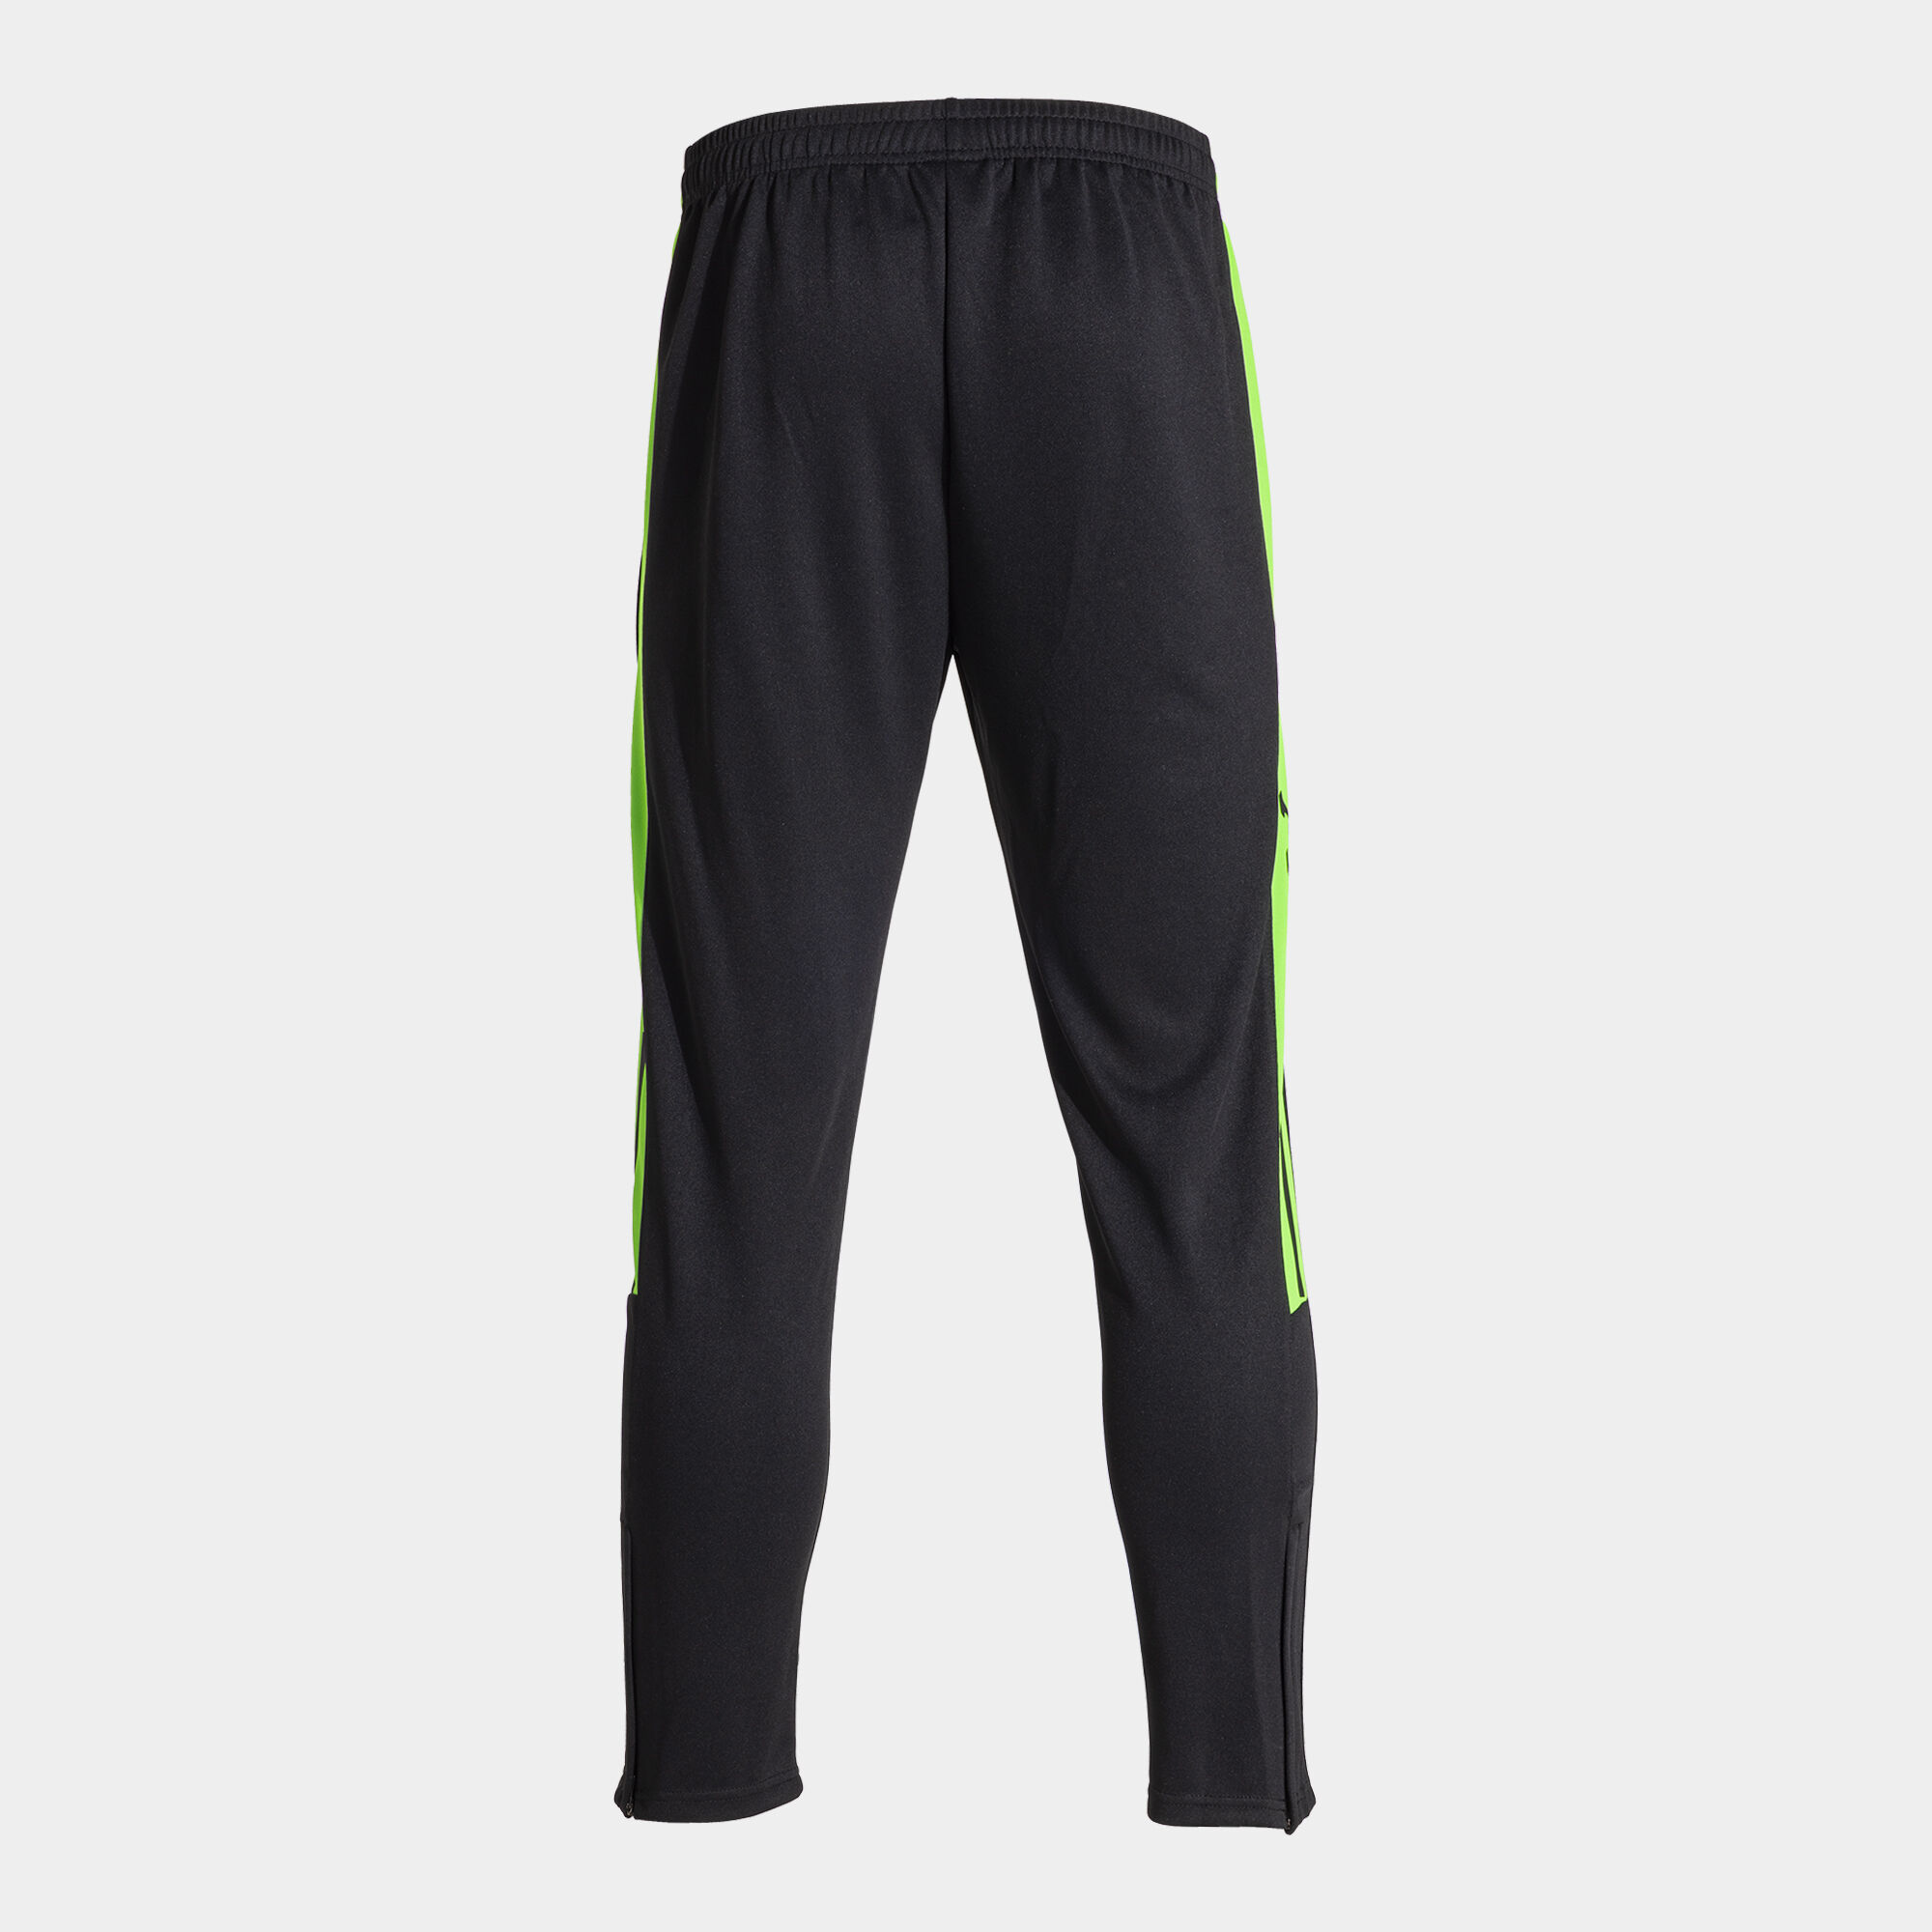 Pantalone lungo uomo Olimpiada nero verde fluorescente